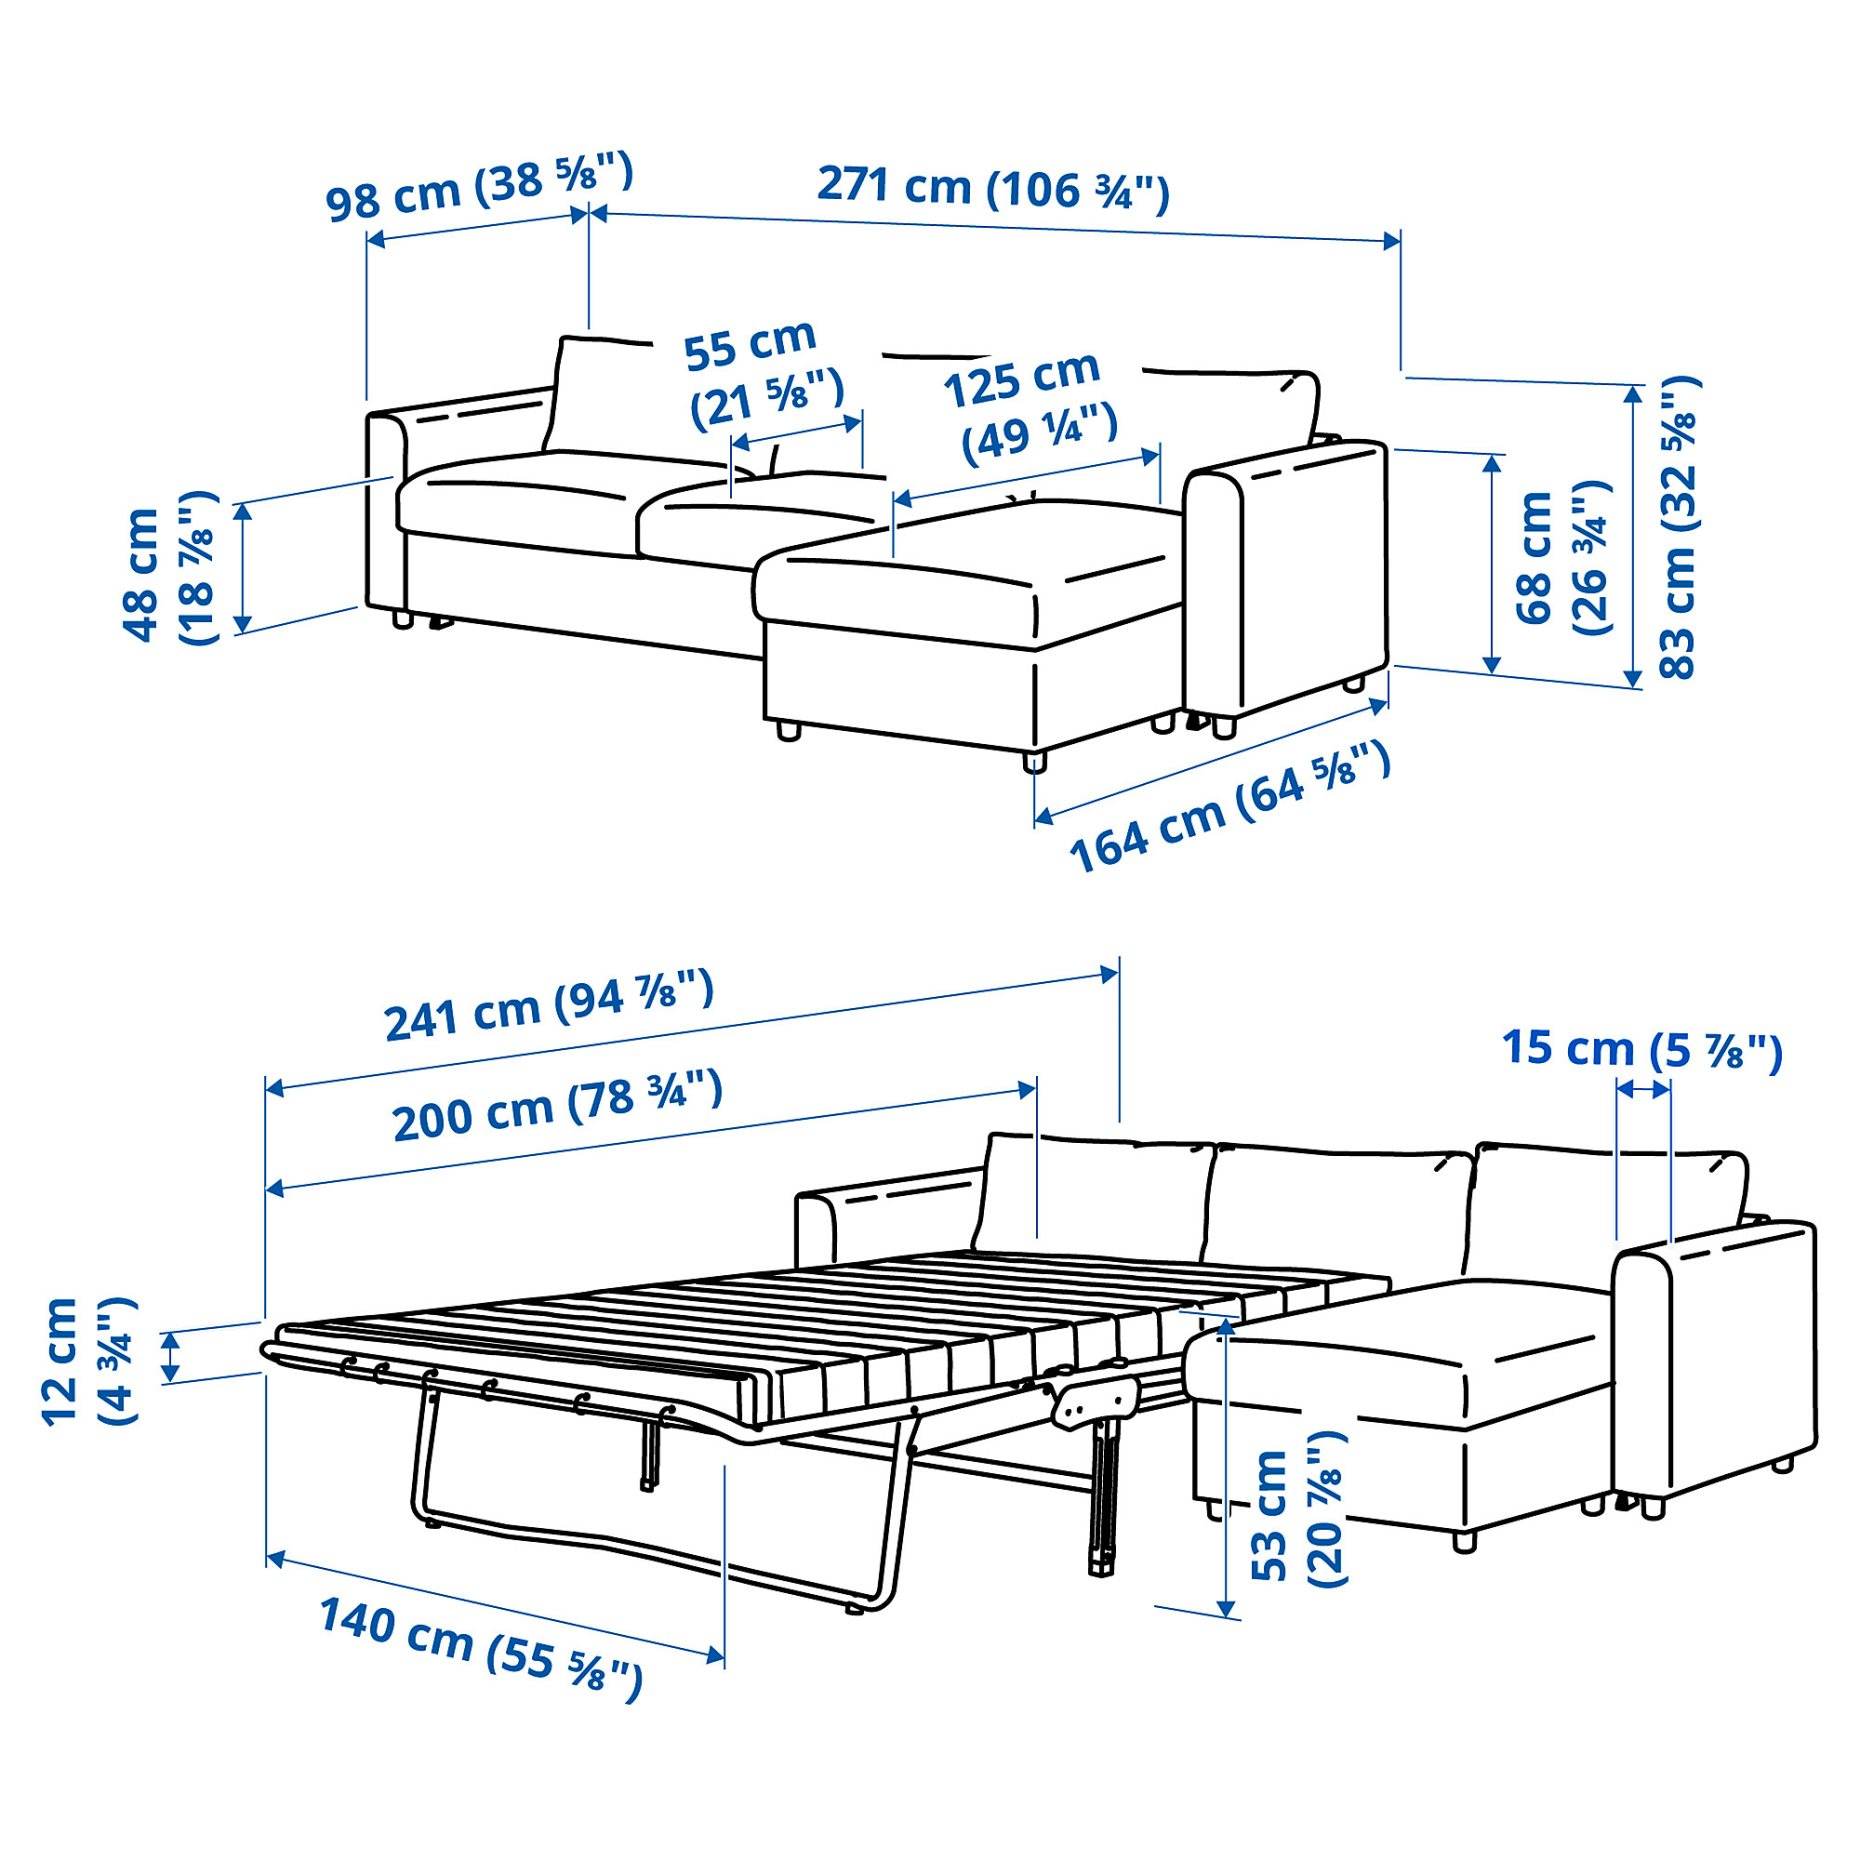 VIMLE, τριθέσιος καναπές-κρεβάτι με σεζλόνγκ, 195.452.42